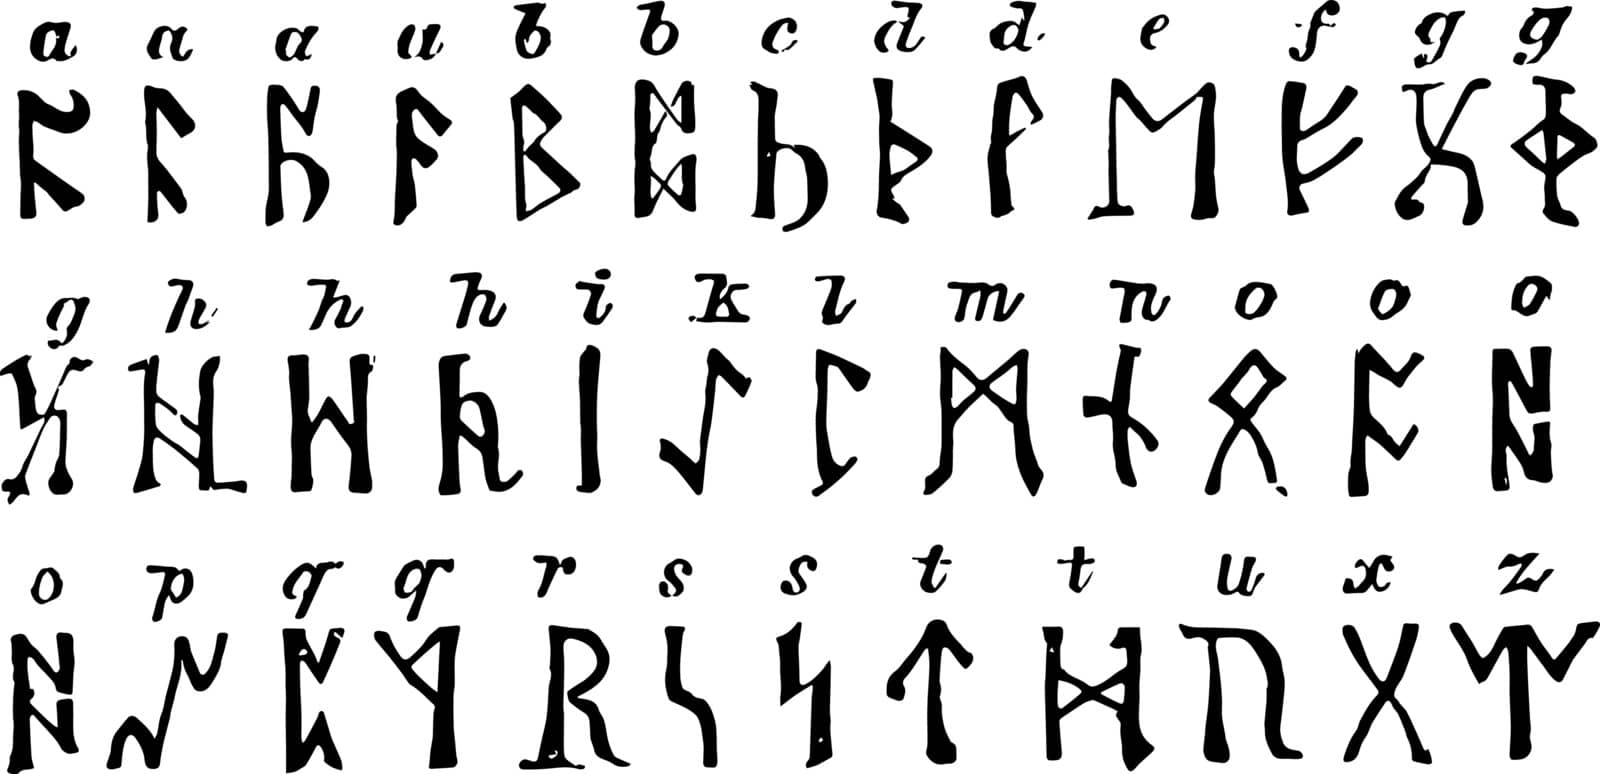 Runic Alphabet, vintage illustration. by Morphart